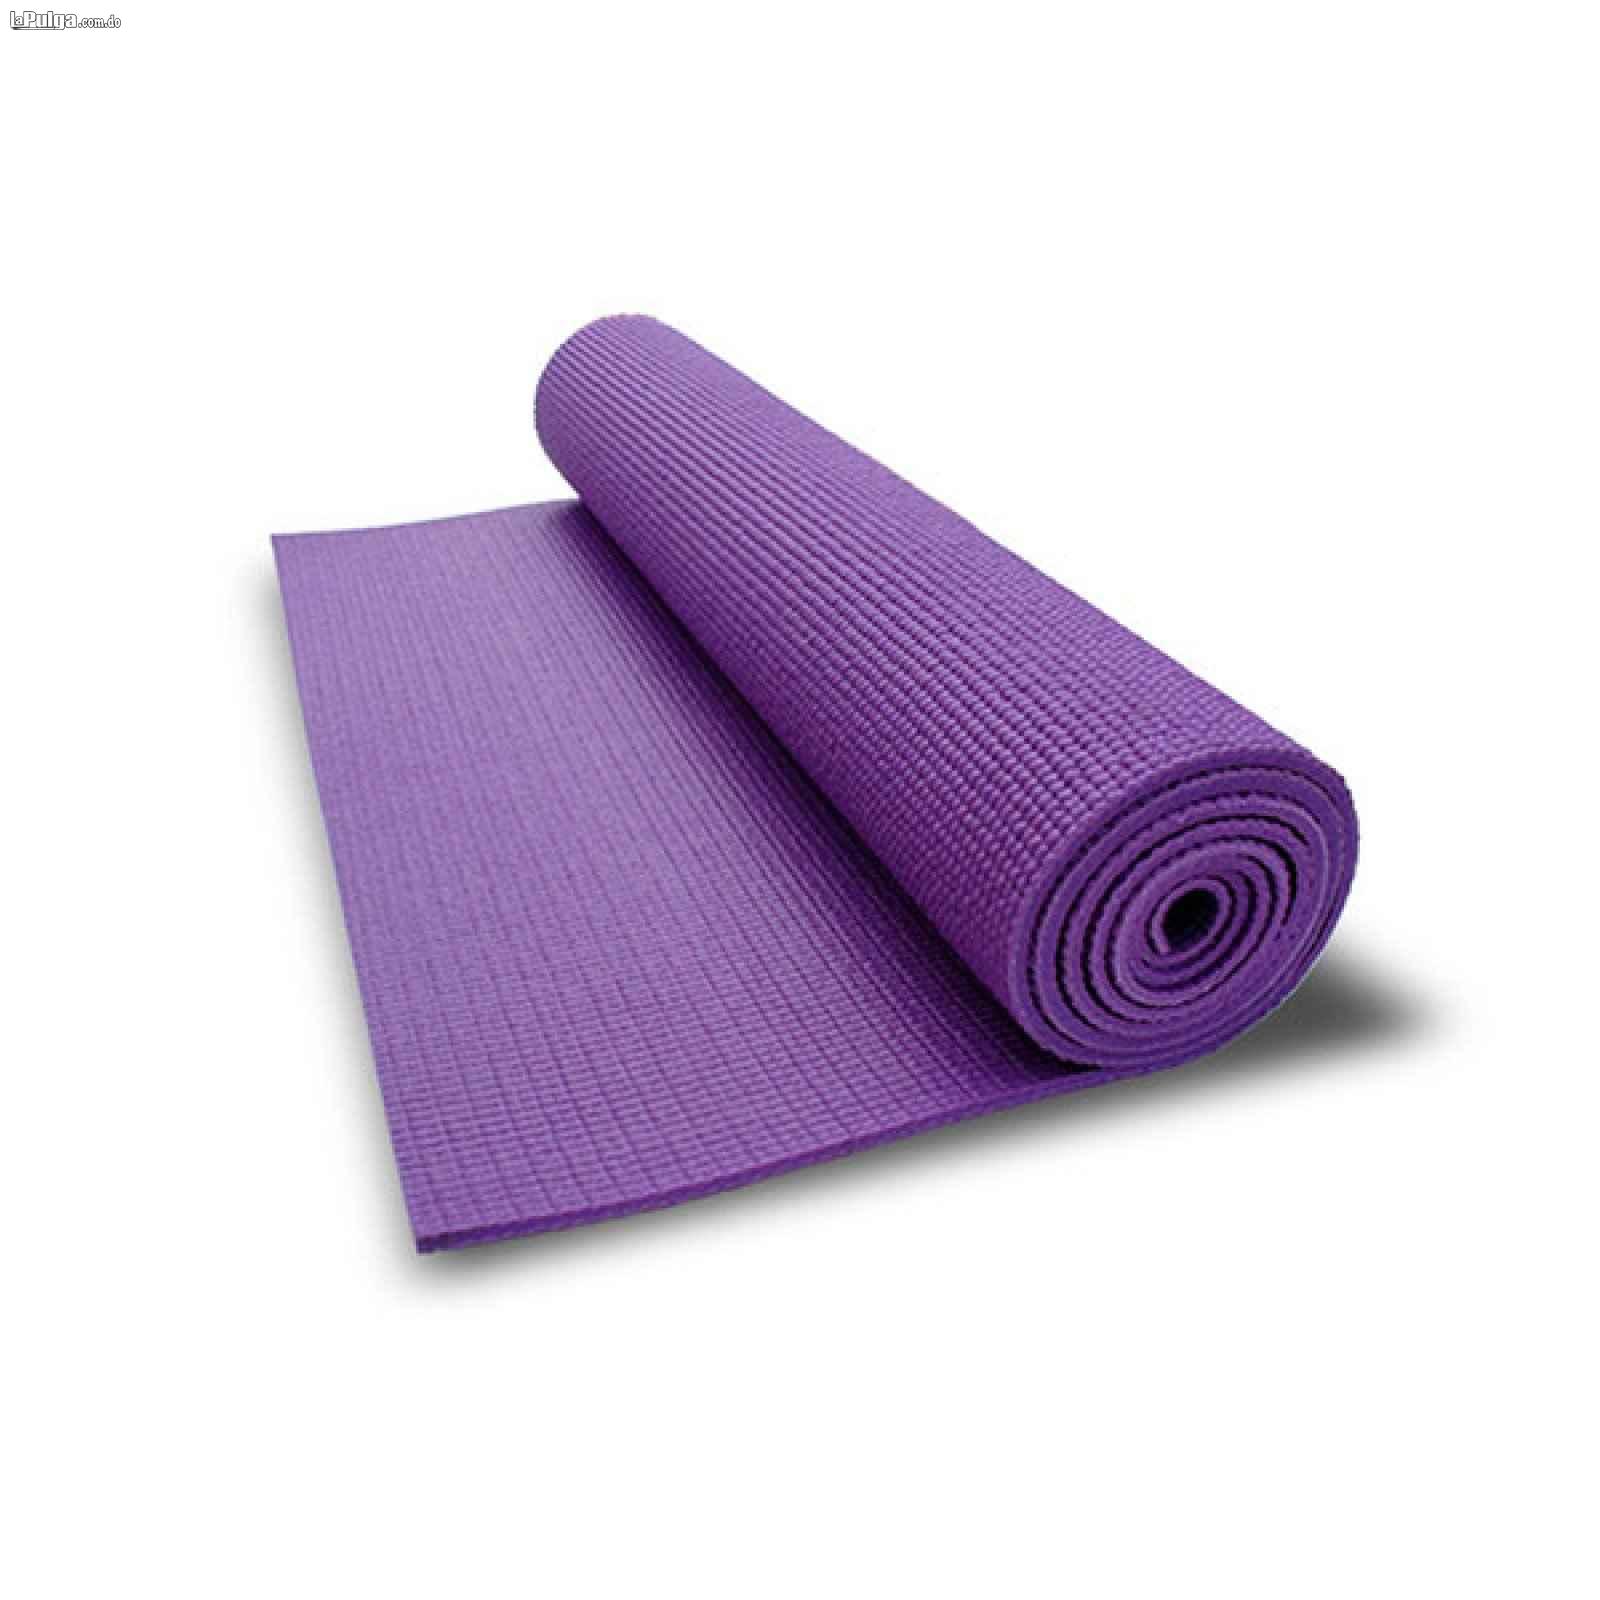 Yoga Mat Colchoneta manta Gimnasia Deporte ejercicio alfombra Foto 6899746-4.jpg